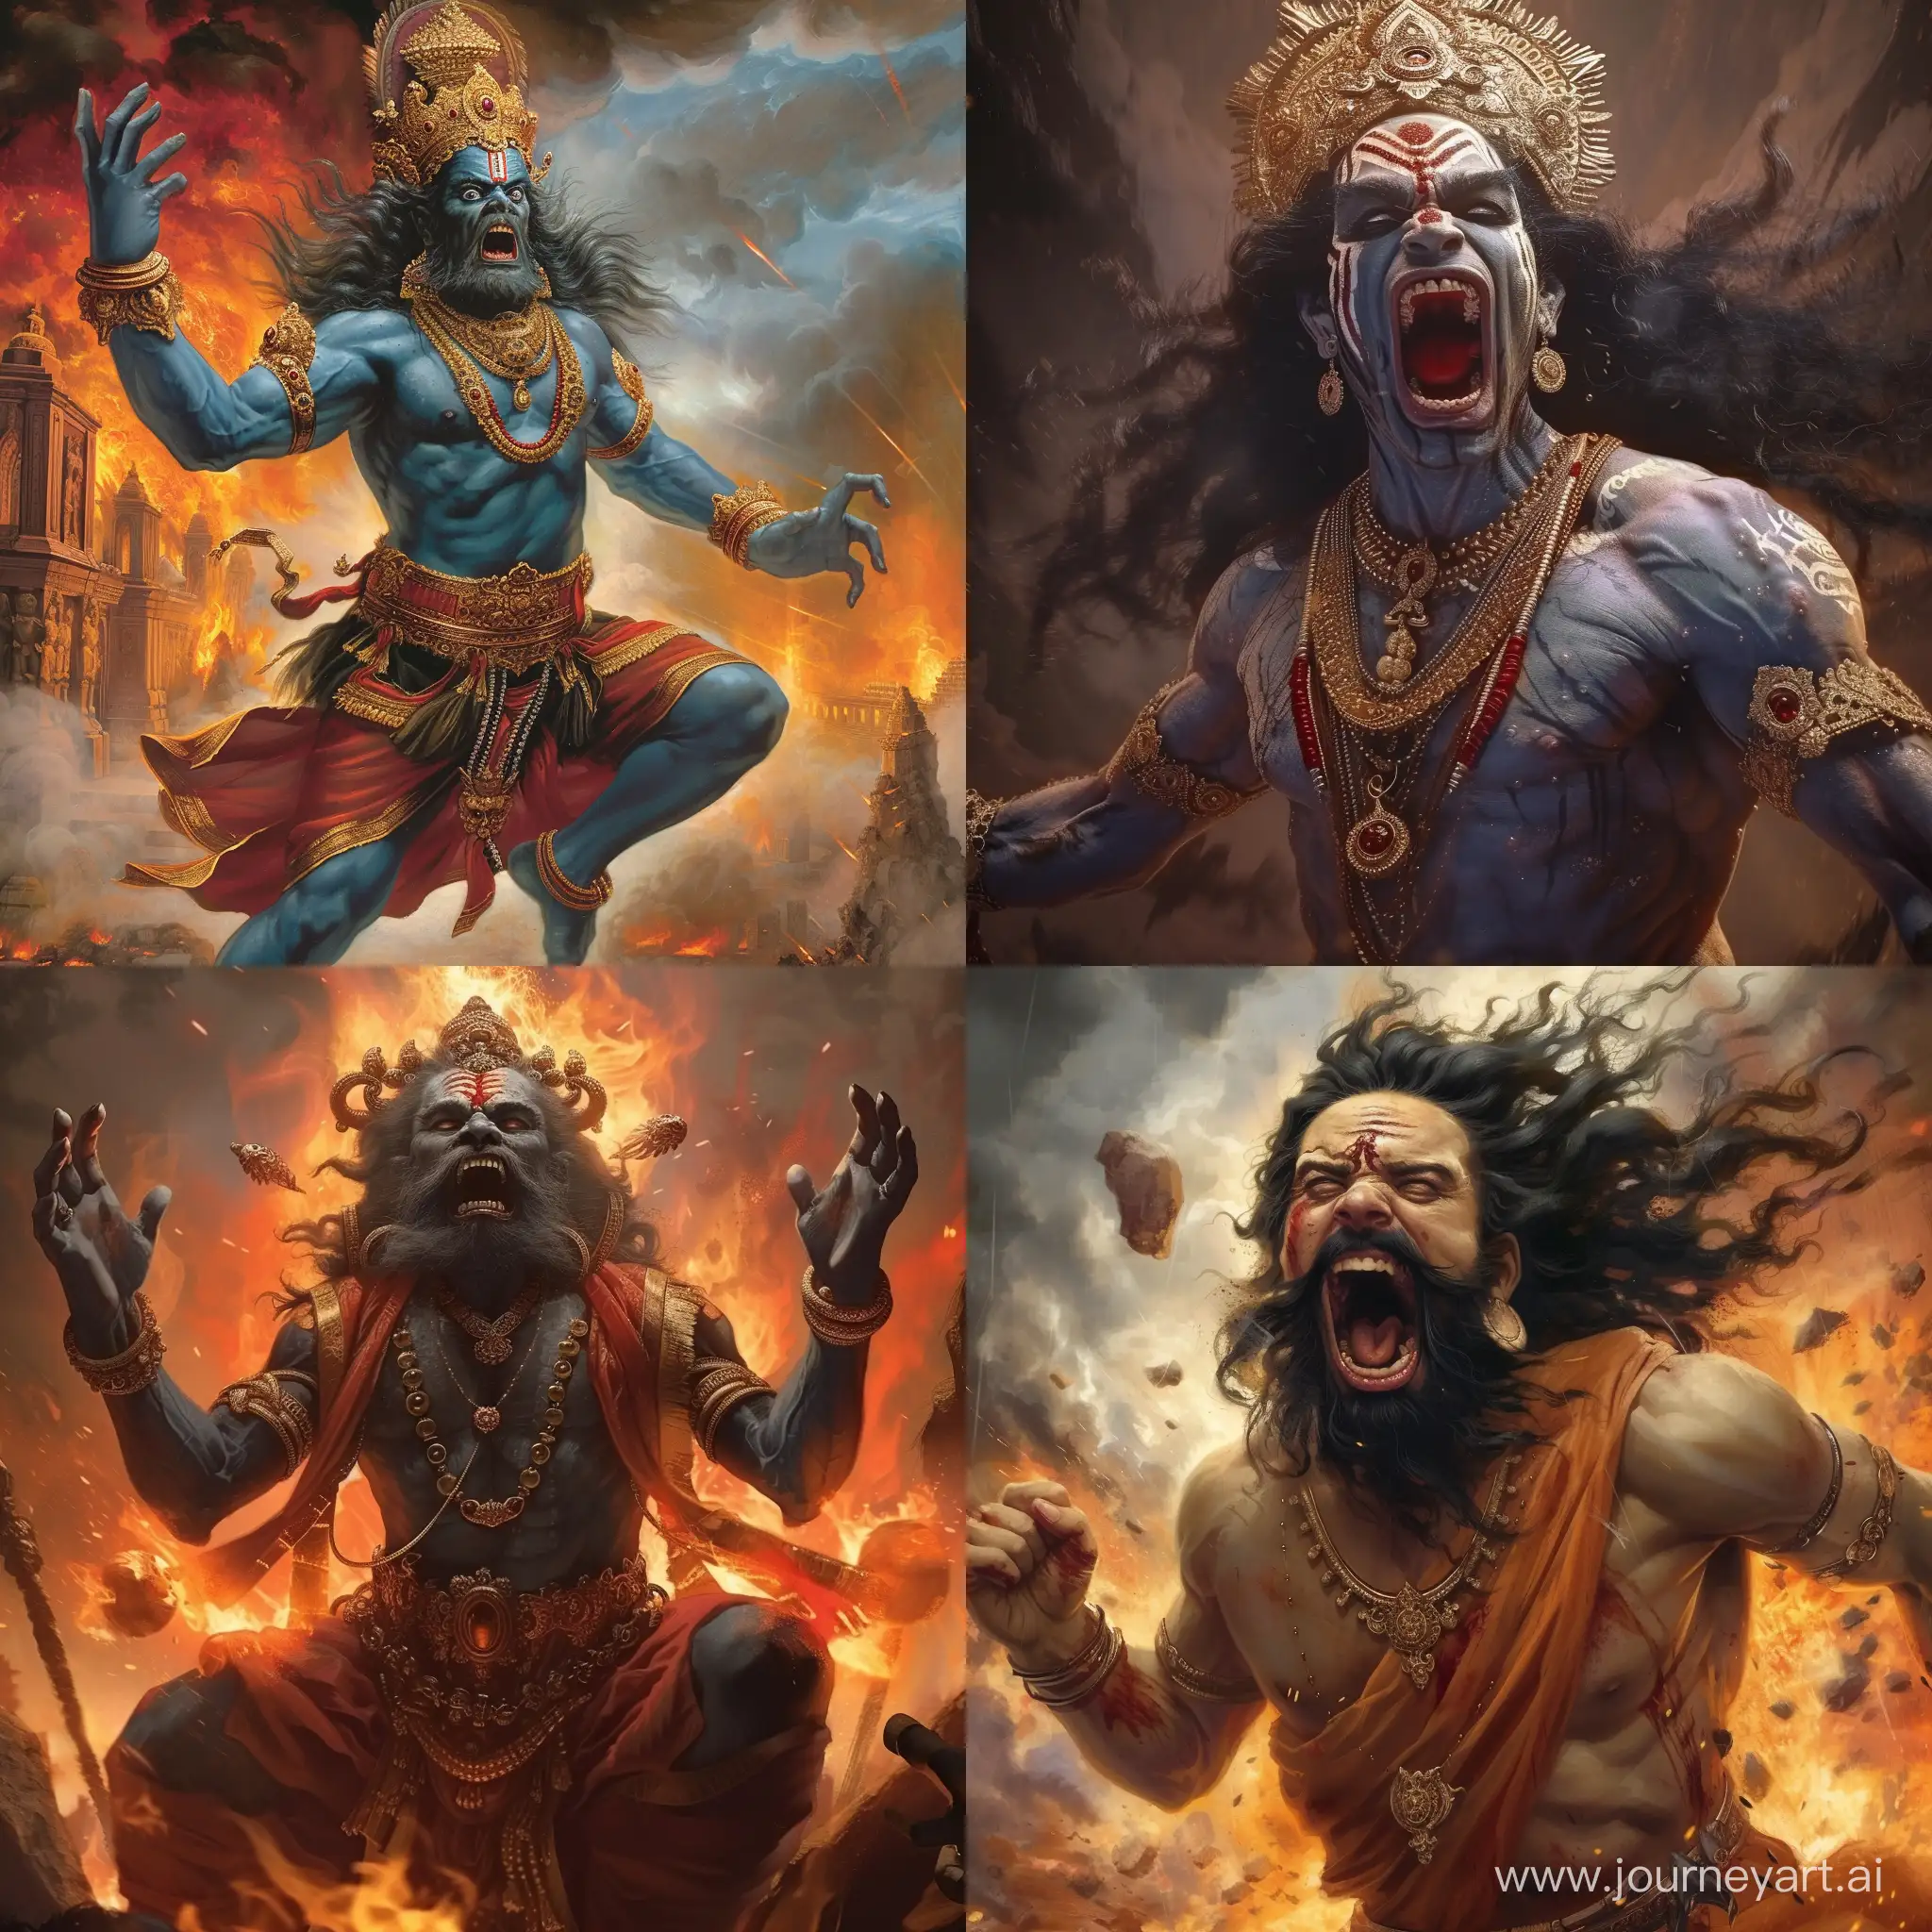 Fierce-Kalki-Avatar-of-the-Kali-Yuga